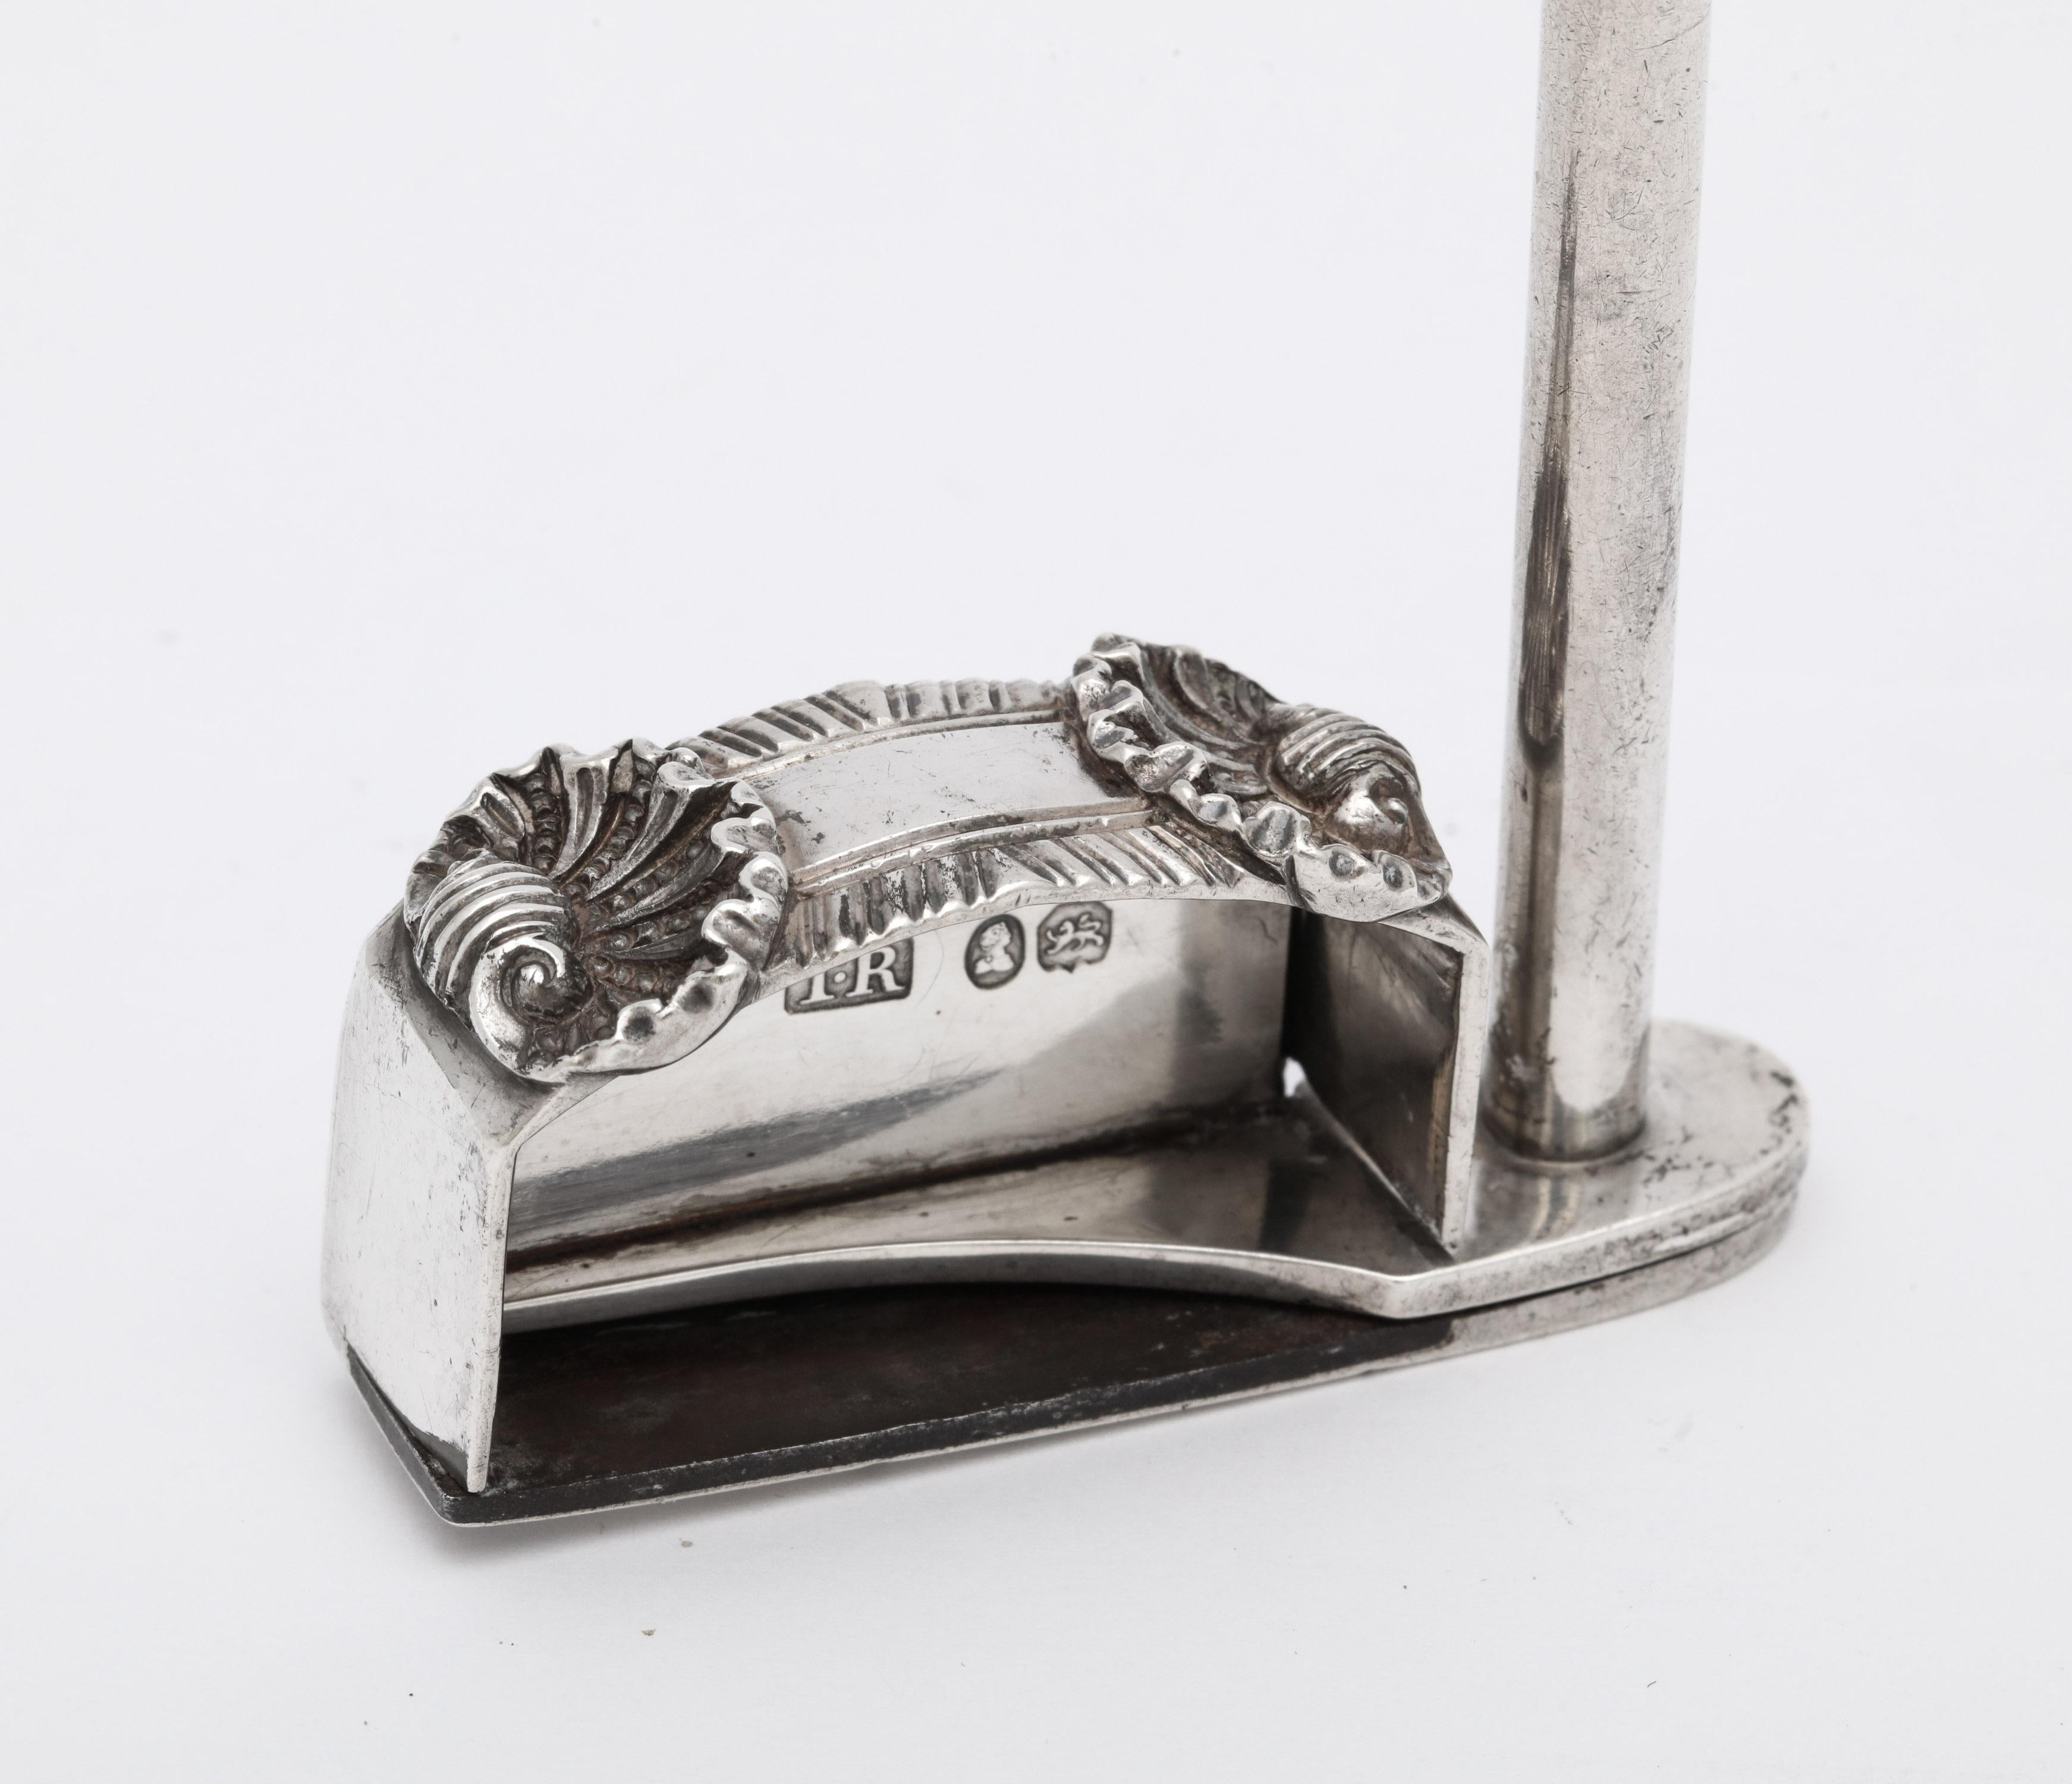 Rare Georgian 'George III' Sterling Silver Candlewick Snuffer/Cutters For Sale 12